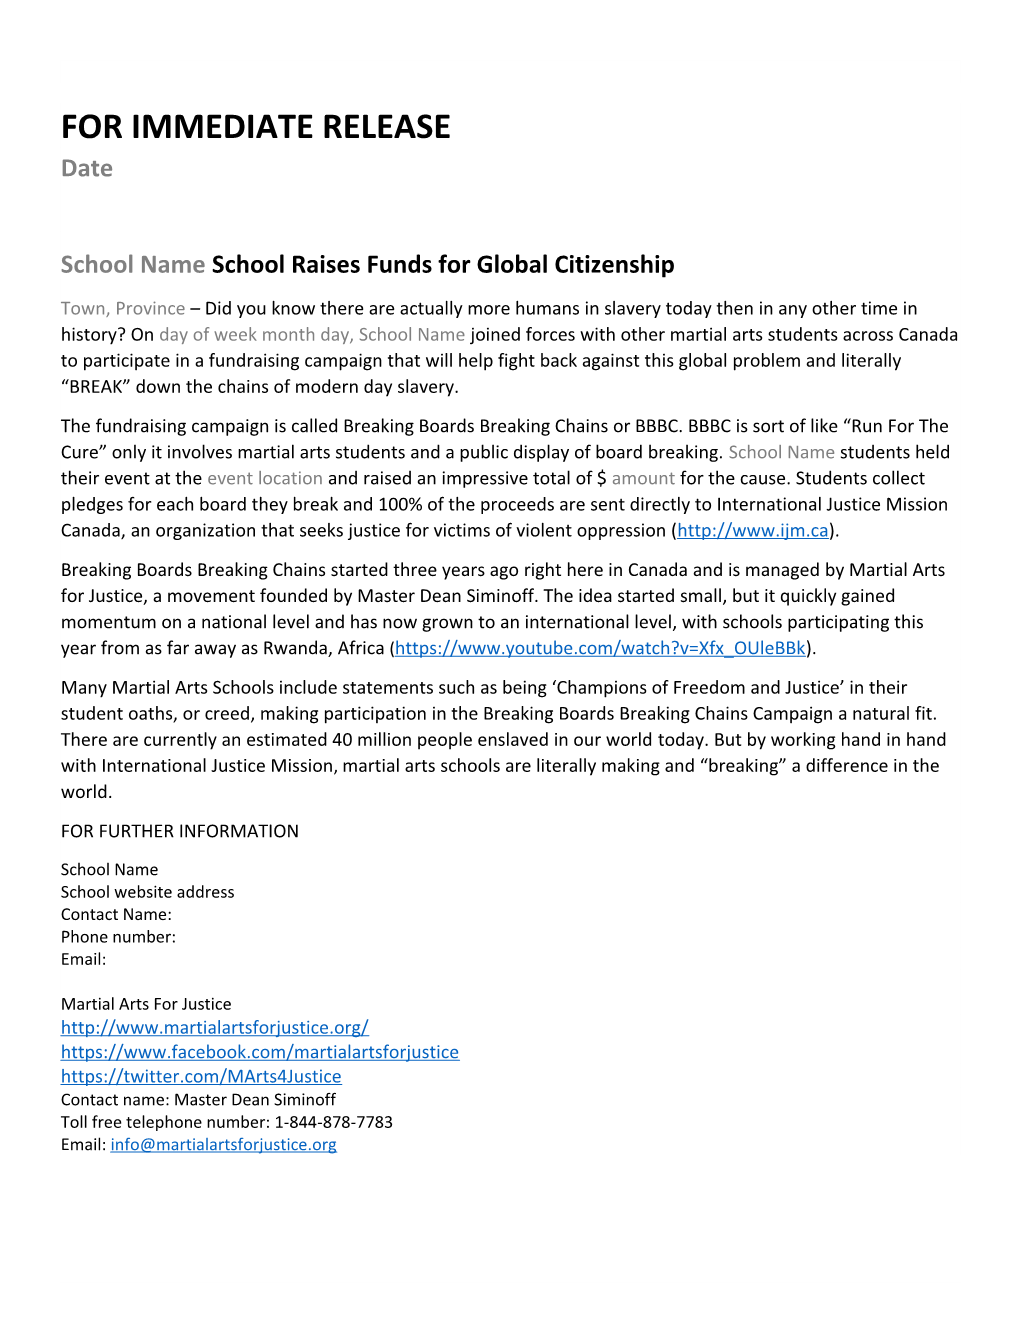 School Name School Raises Funds for Global Citizenship